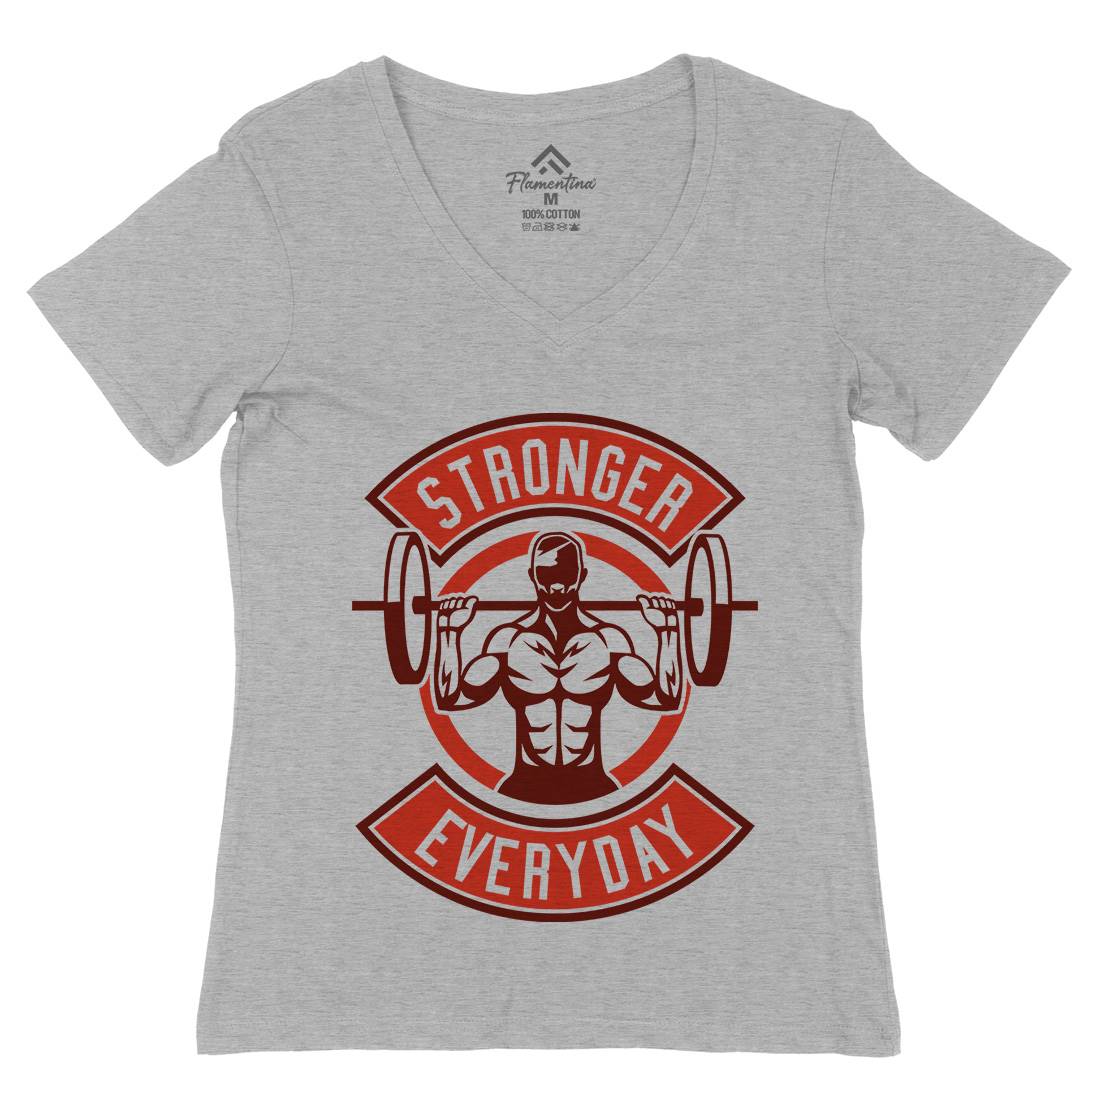 Stronger Everyday Womens Organic V-Neck T-Shirt Gym A289